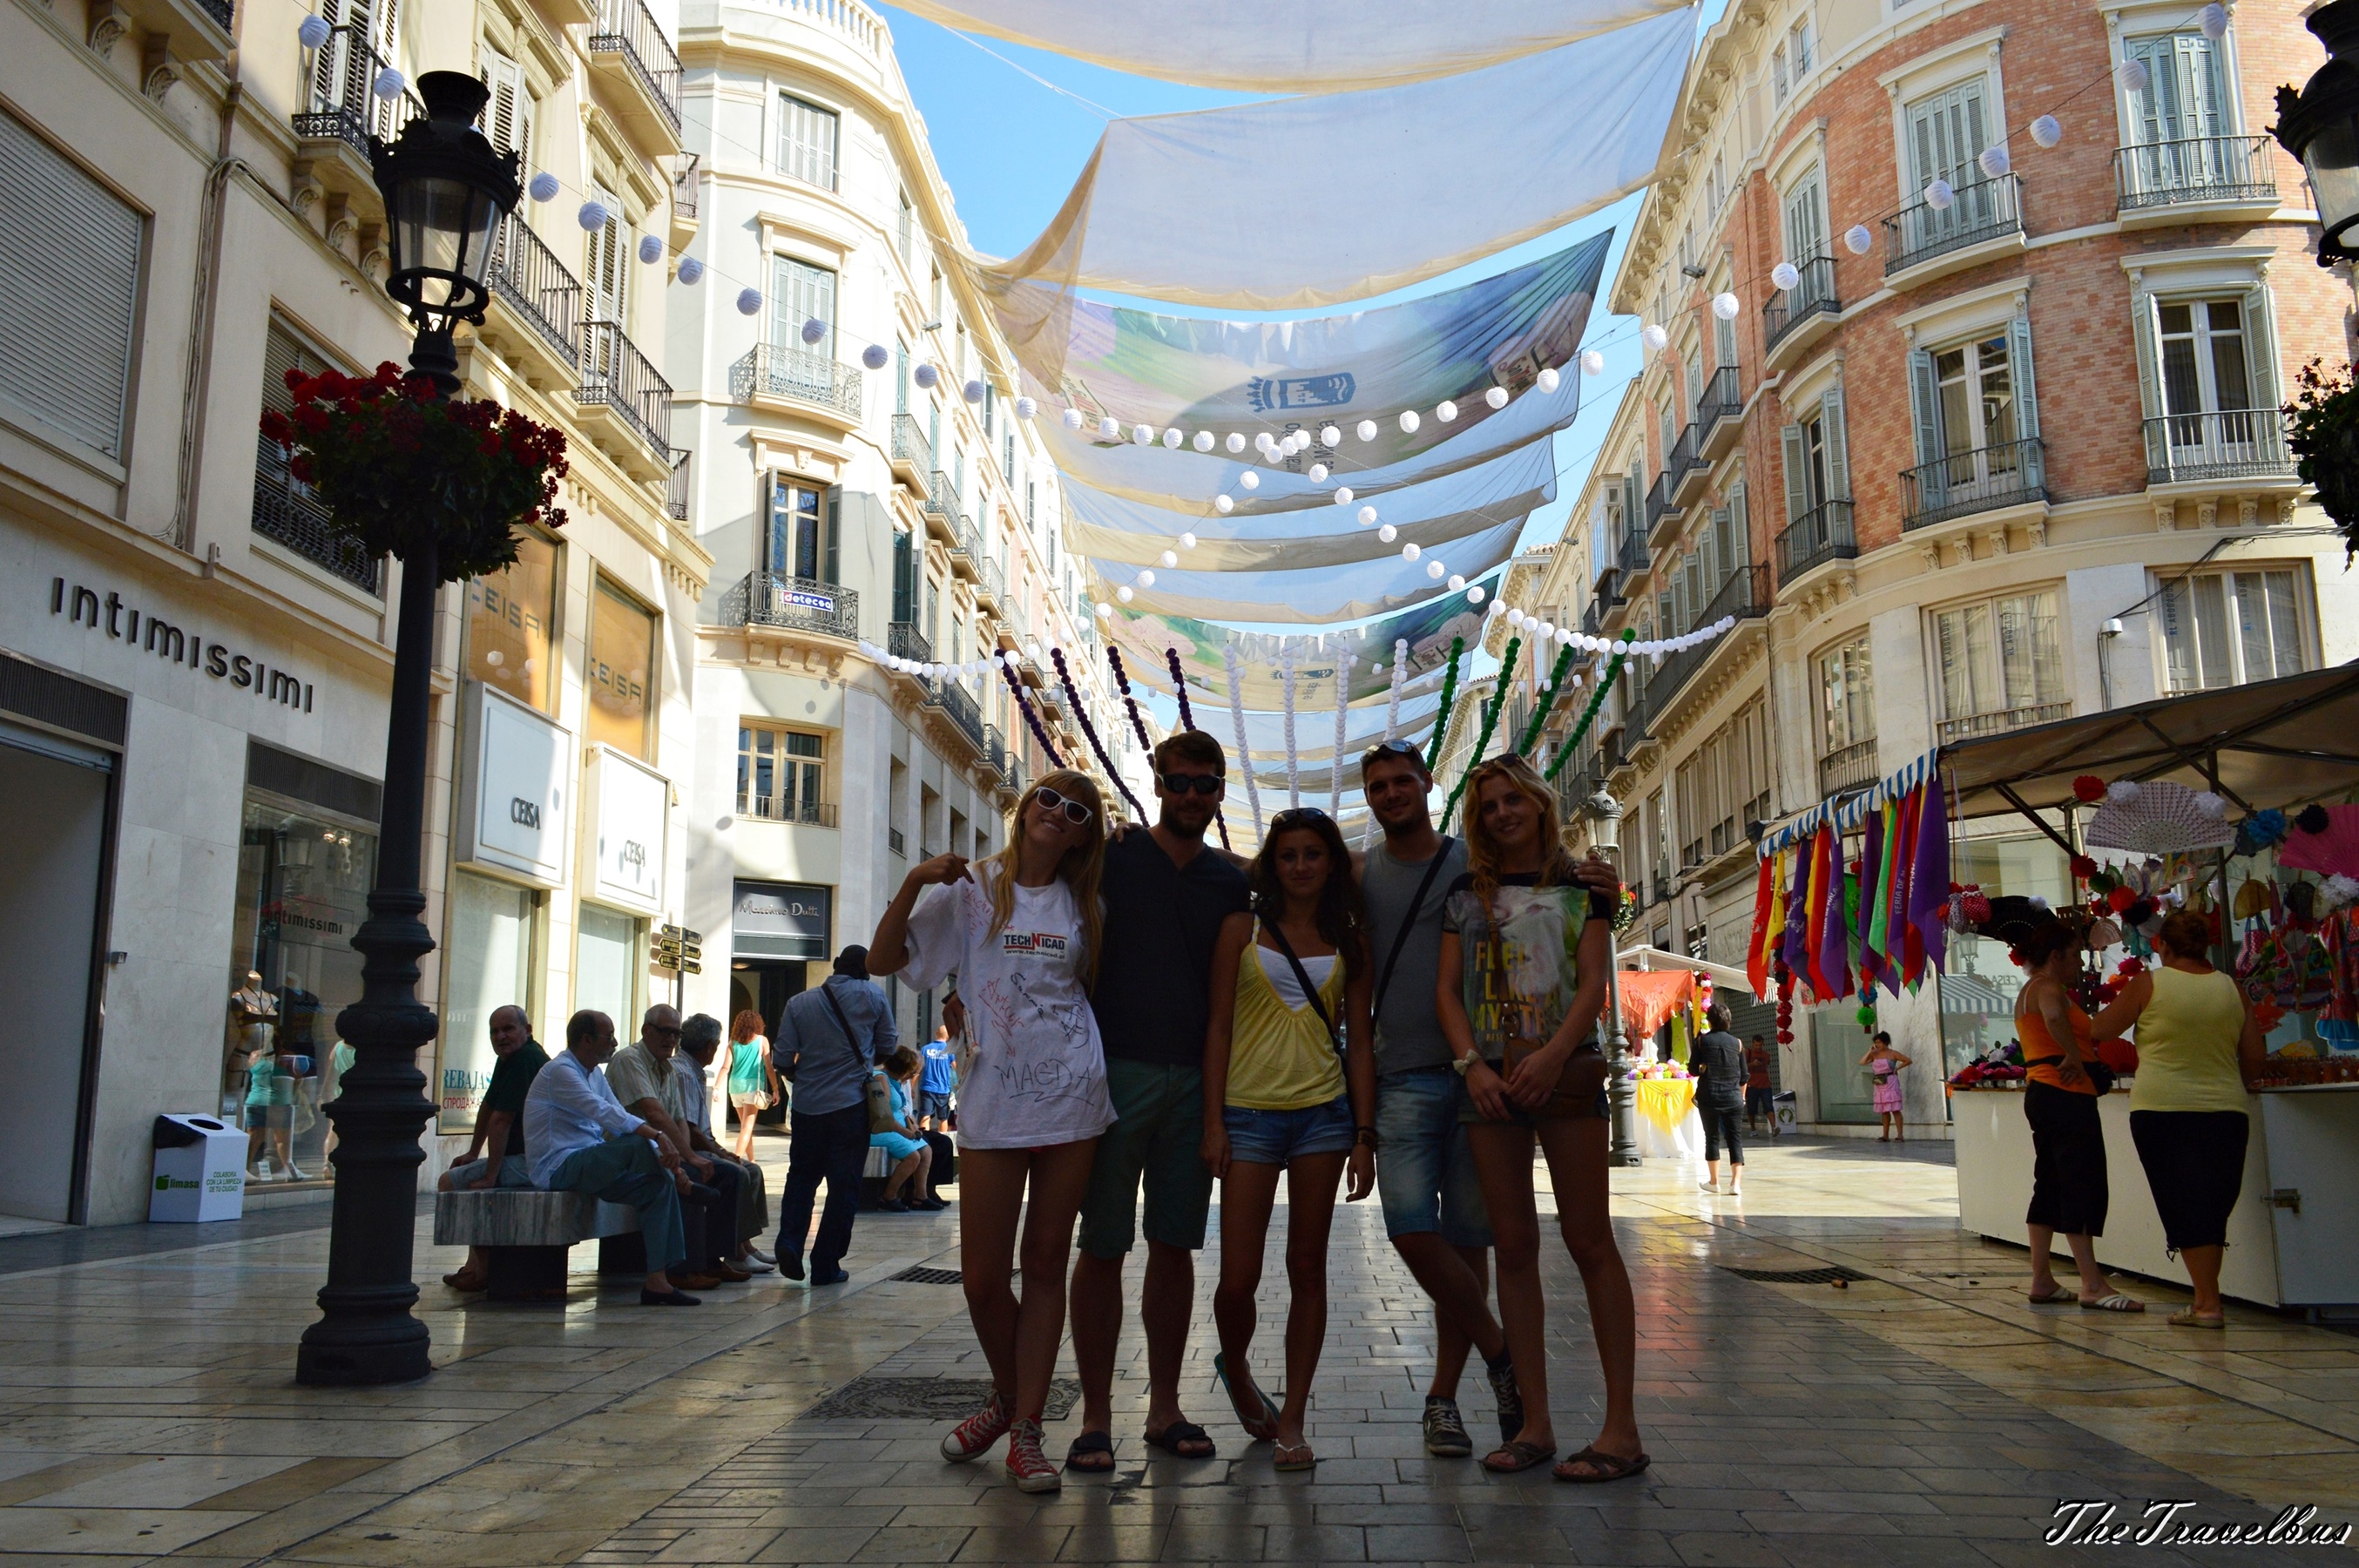 Malaga, a beautiful climatic town